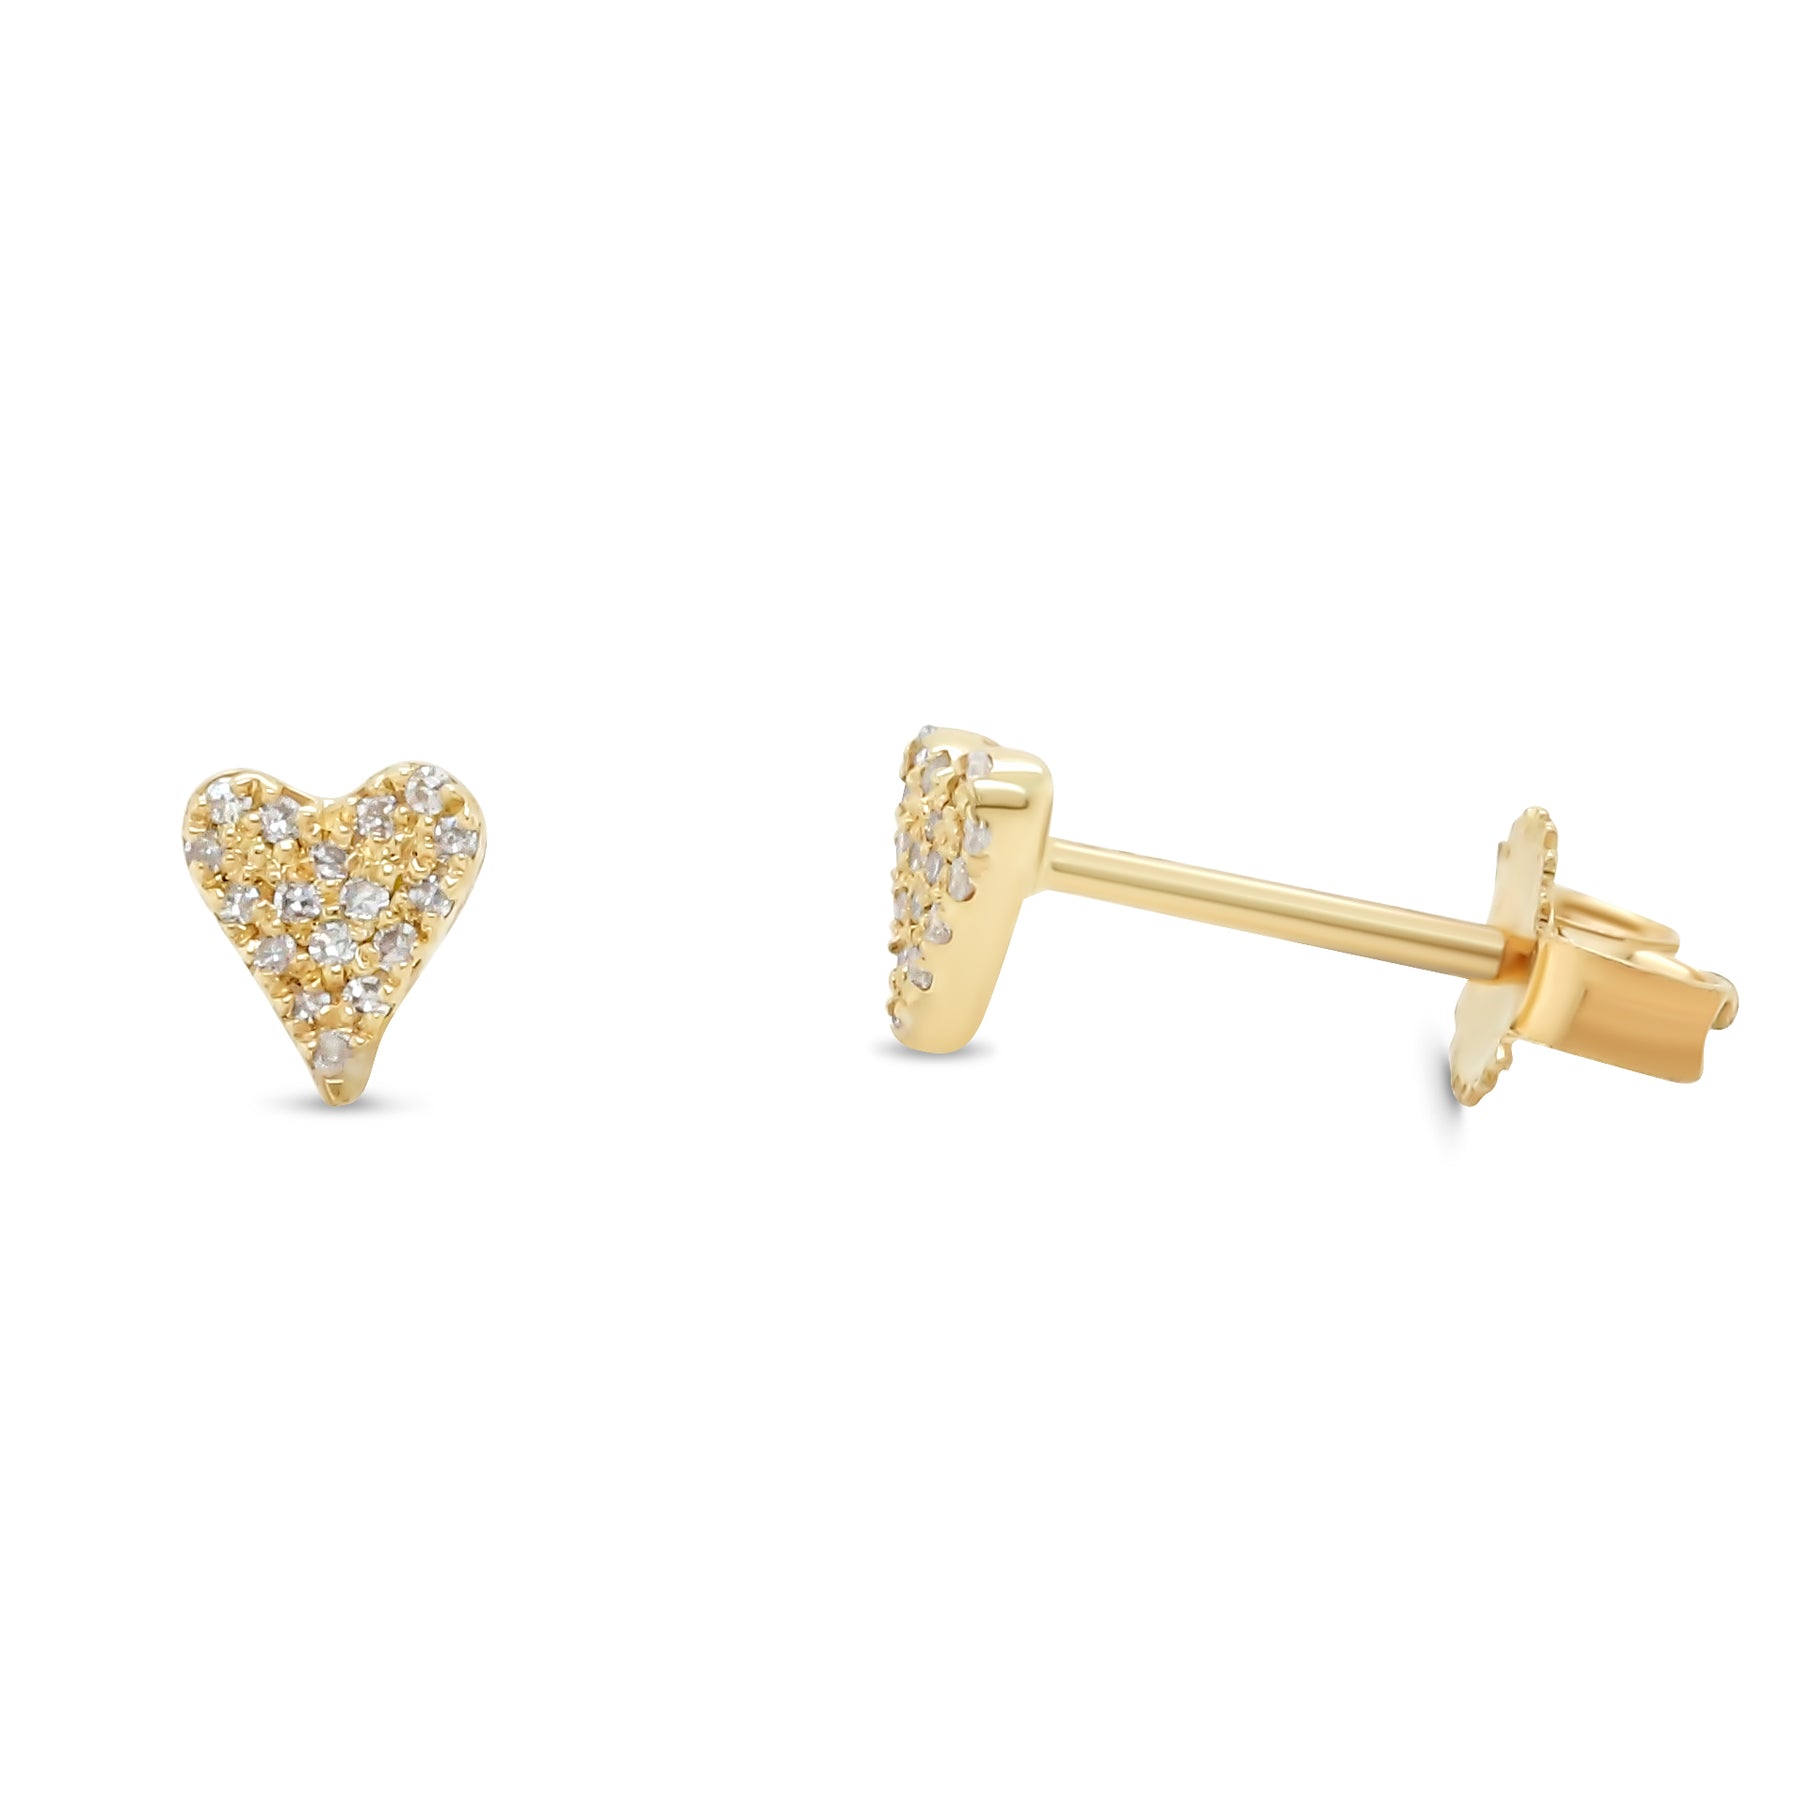 14k yellow gold diamond pave heart shaped stud earrings